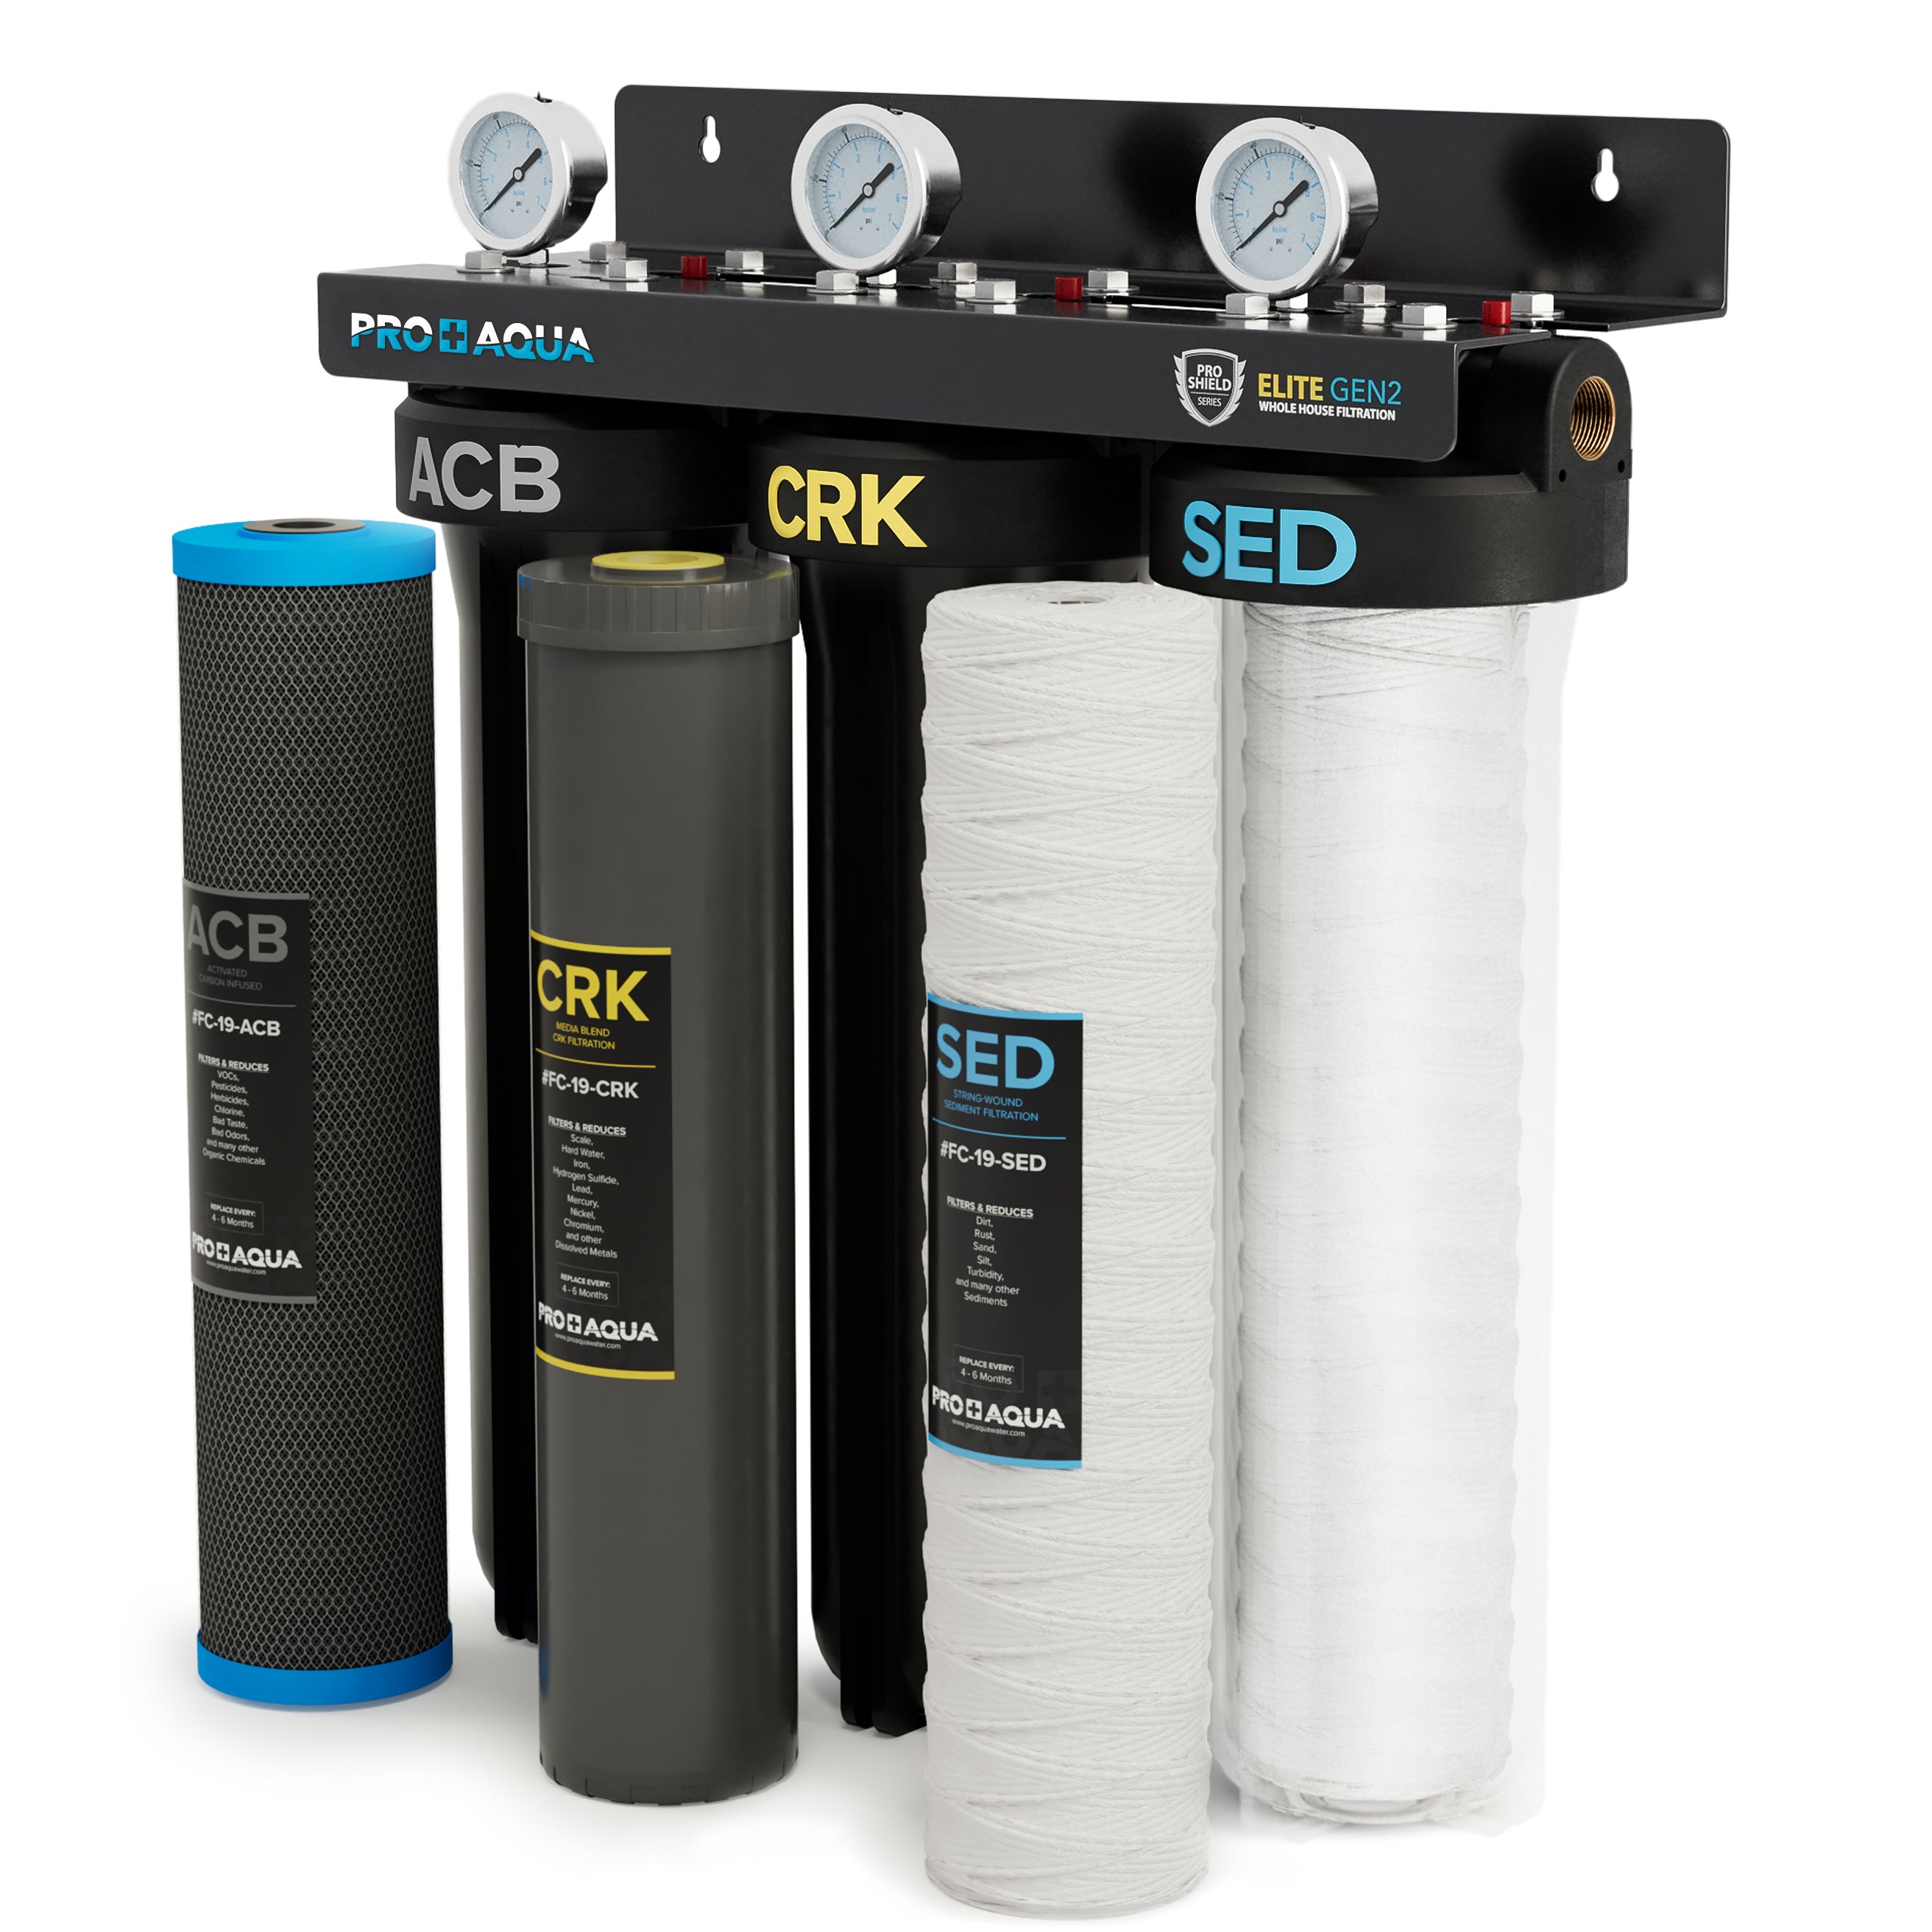 PRO+AQUA WS-P-REG-KITV2 Premium Dual RV/Marine Water Softener Regeneration  Kit and Water Filter, Reduces Bad Taste, Odor, Sediment, Chlorine